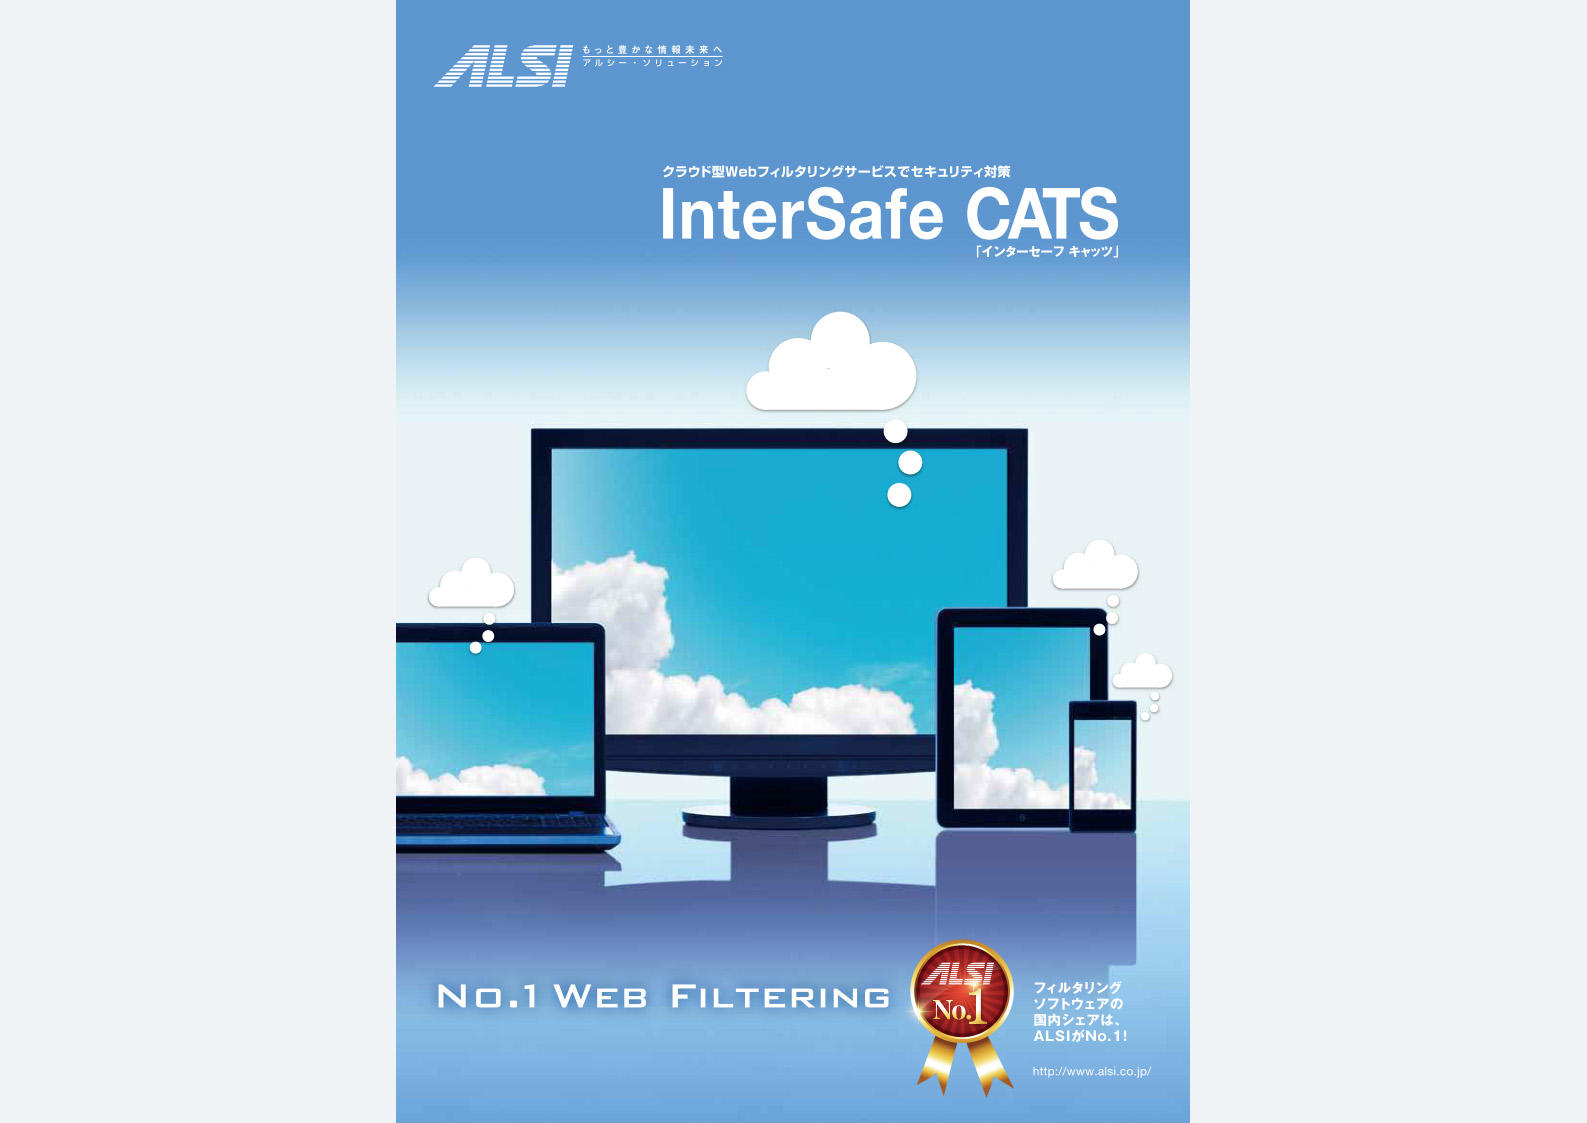 InterSafe CATS カタログ
（A4サイズ印刷用）
